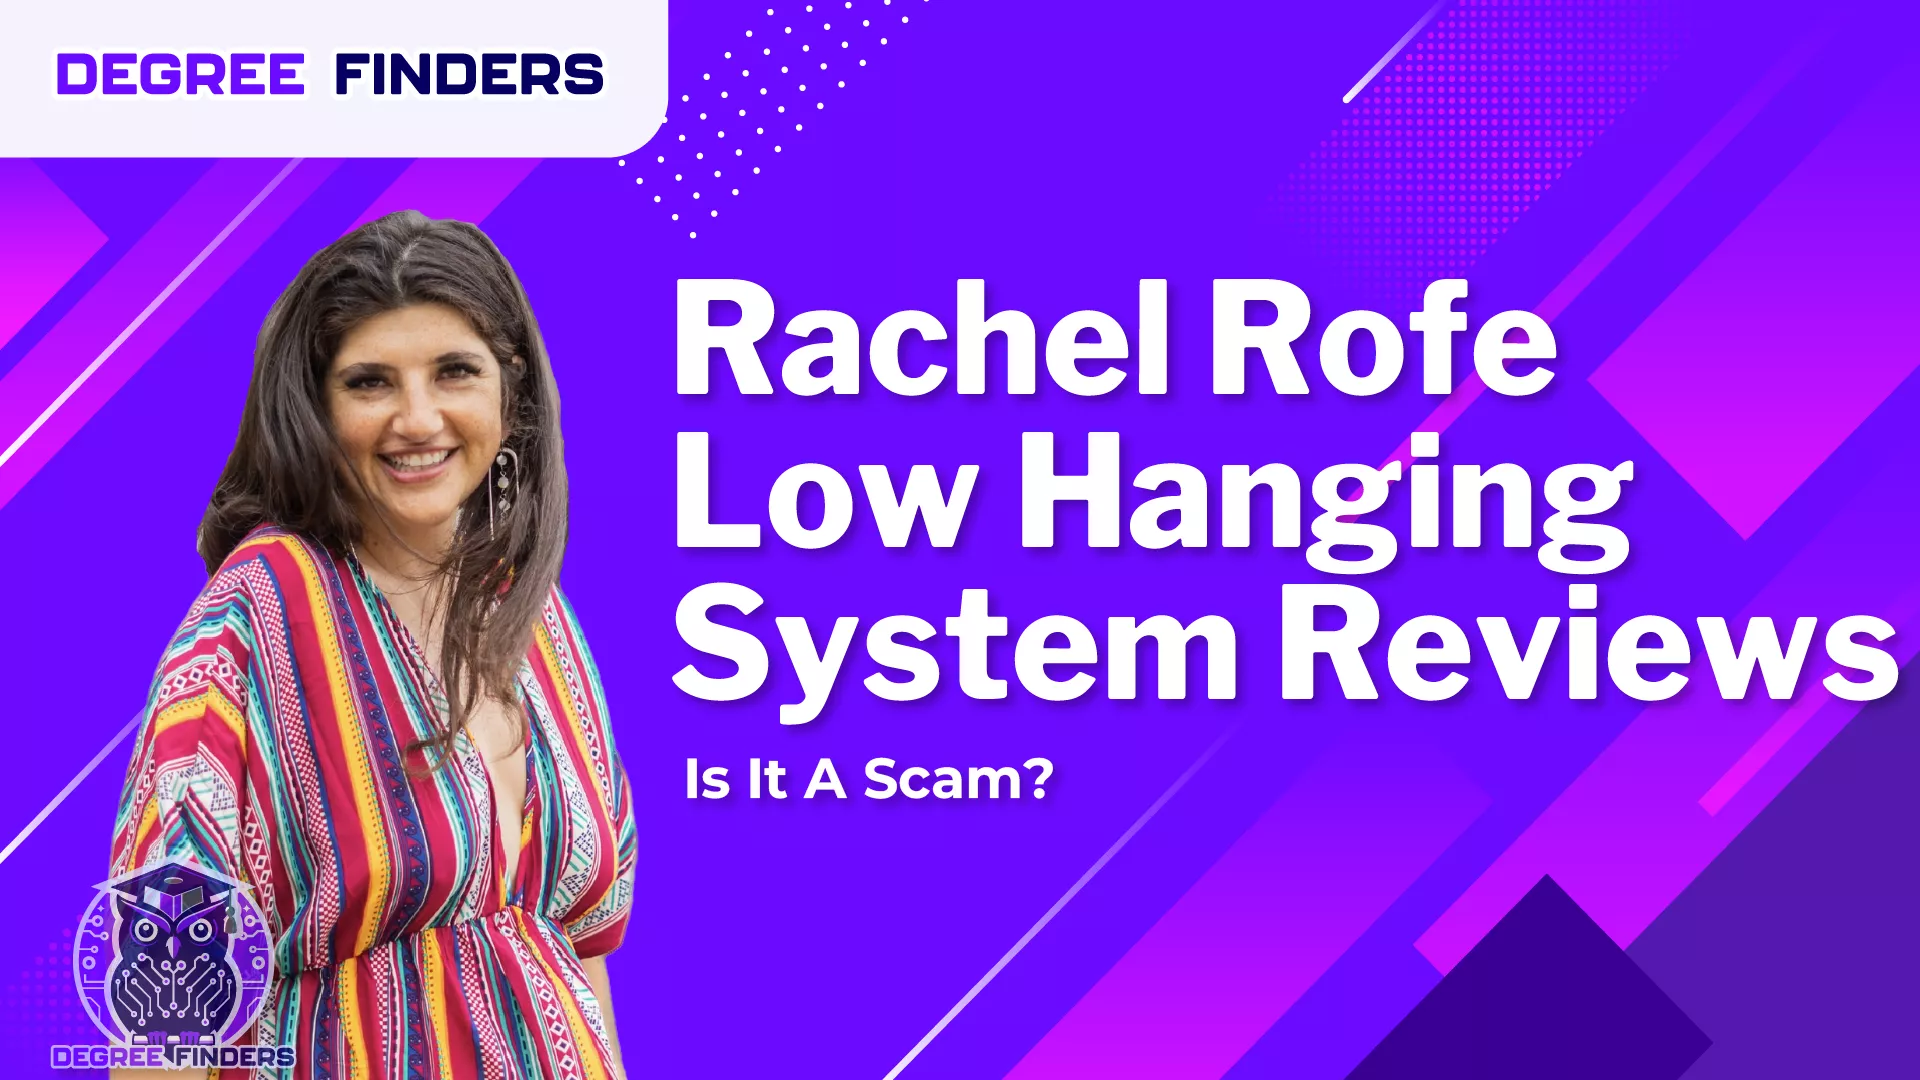 Rachel Rofe Low Hanging System Reviews